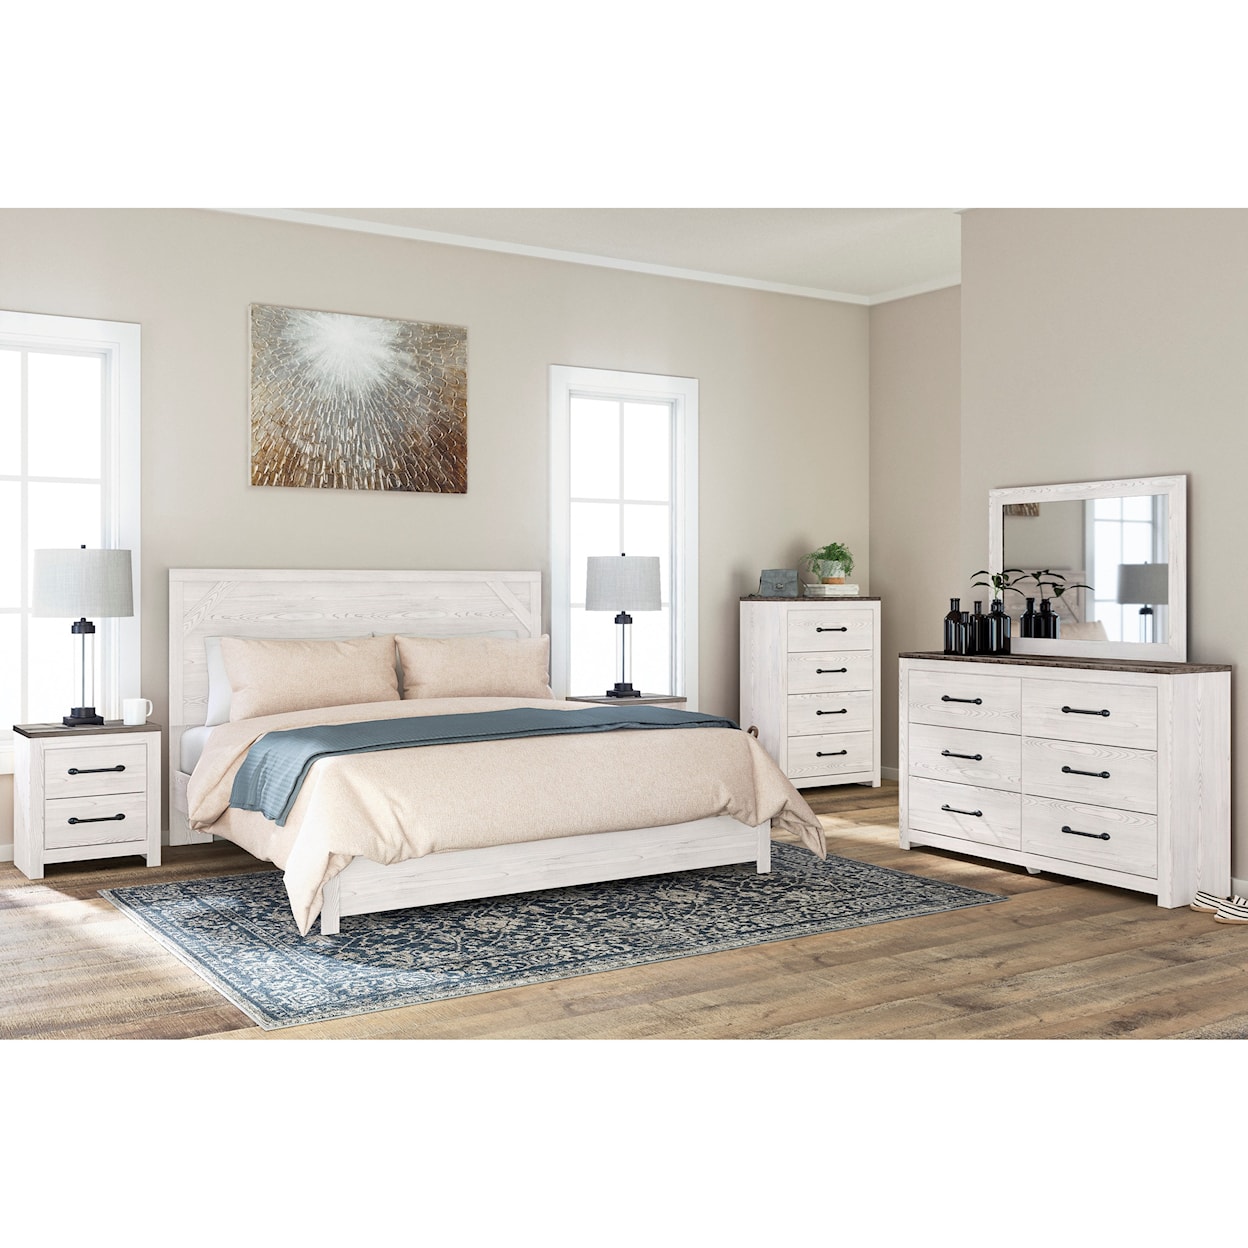 Ashley Furniture Signature Design Gerridan King Bedroom Group